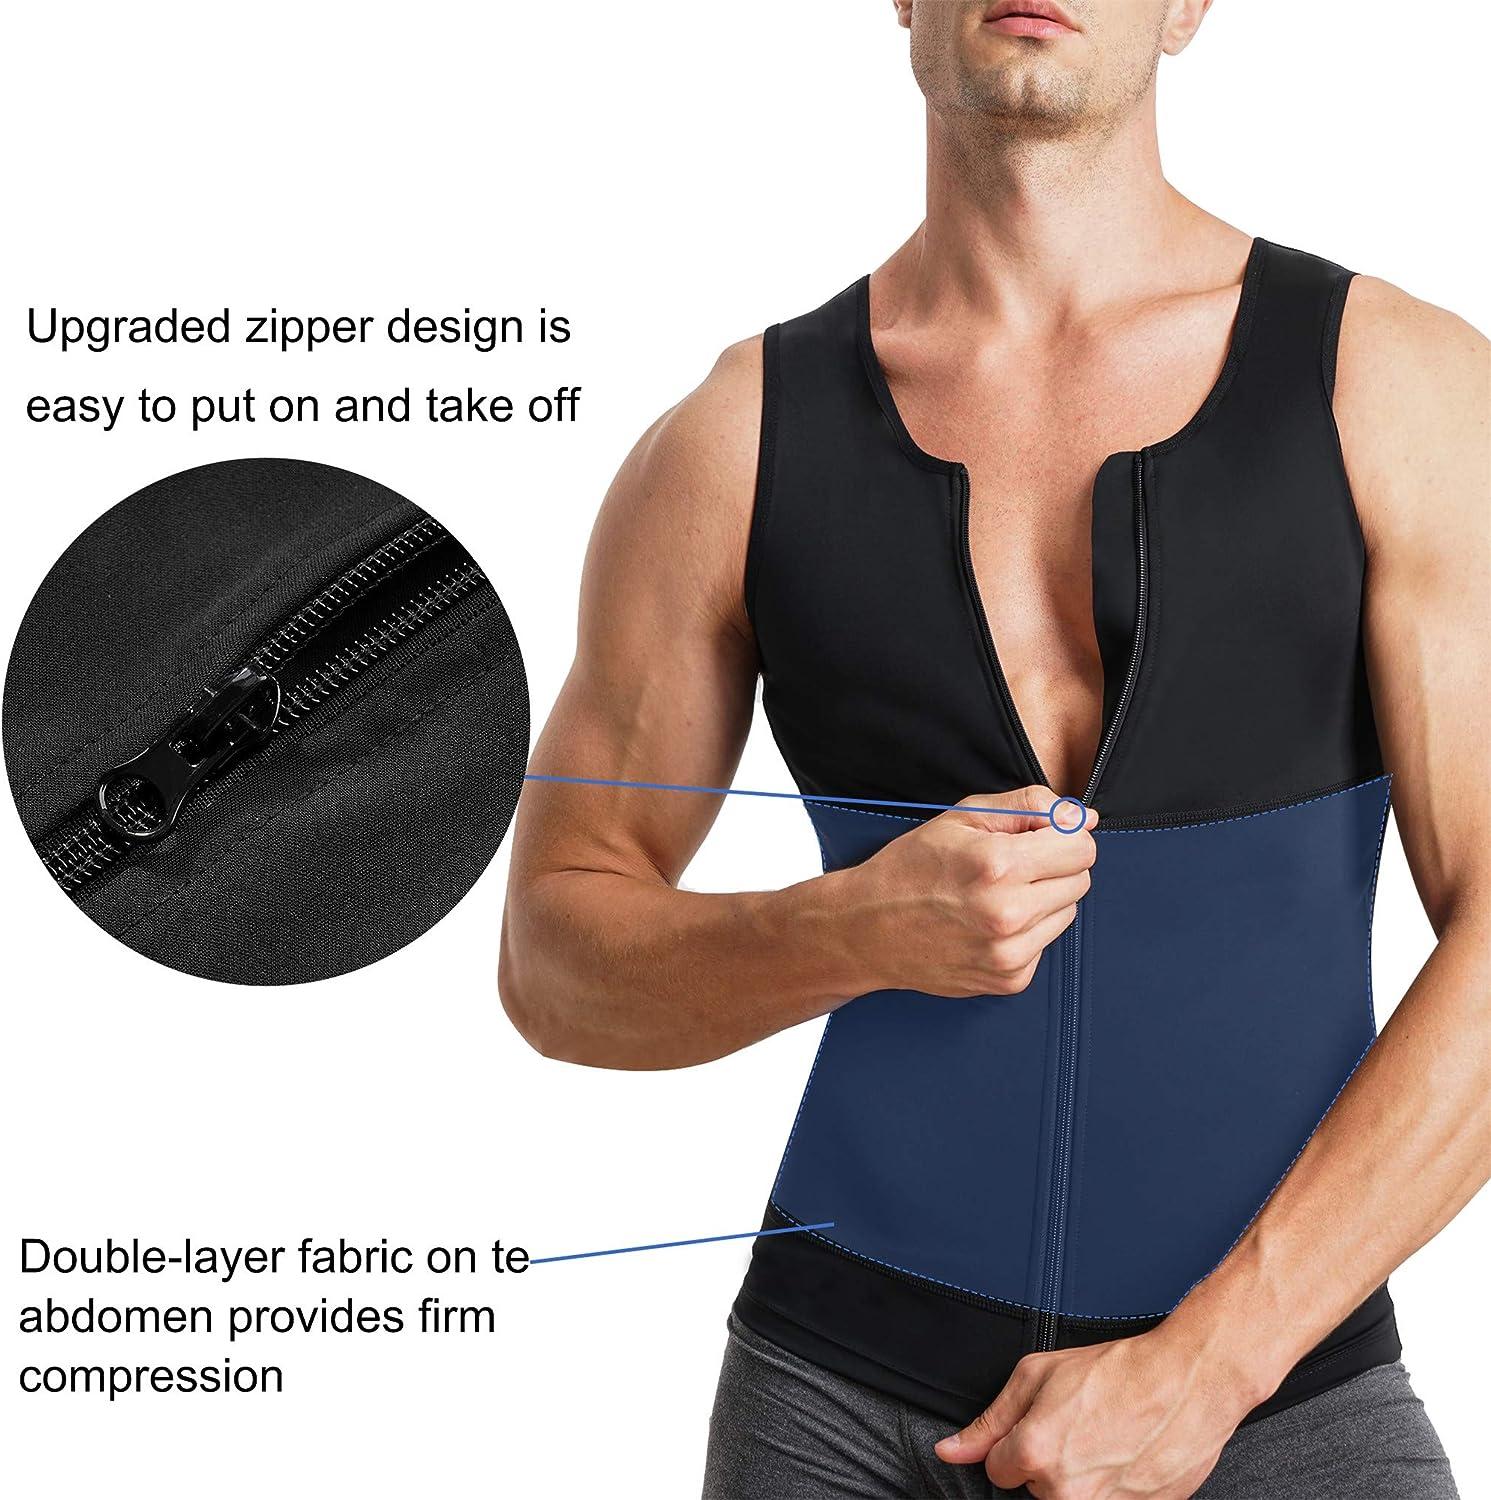 Mens Compression Slimming Shirt with Slimming Belt